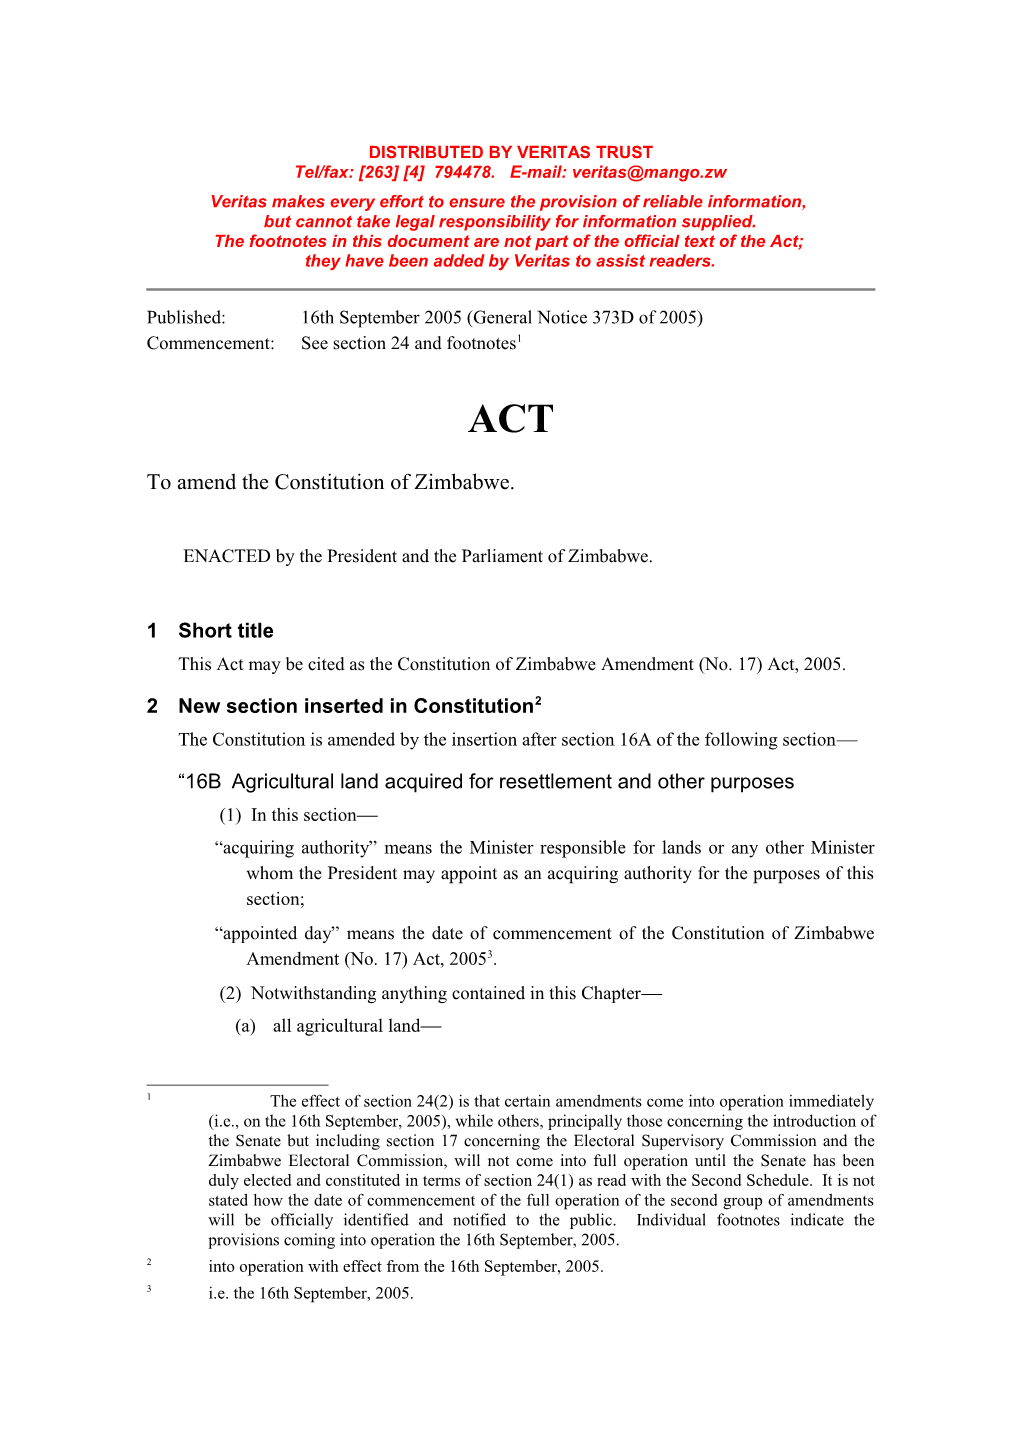 Constitution of Zimbabwe Amendment (No. 17) Actl, 2005 (No. 5 of 2005)